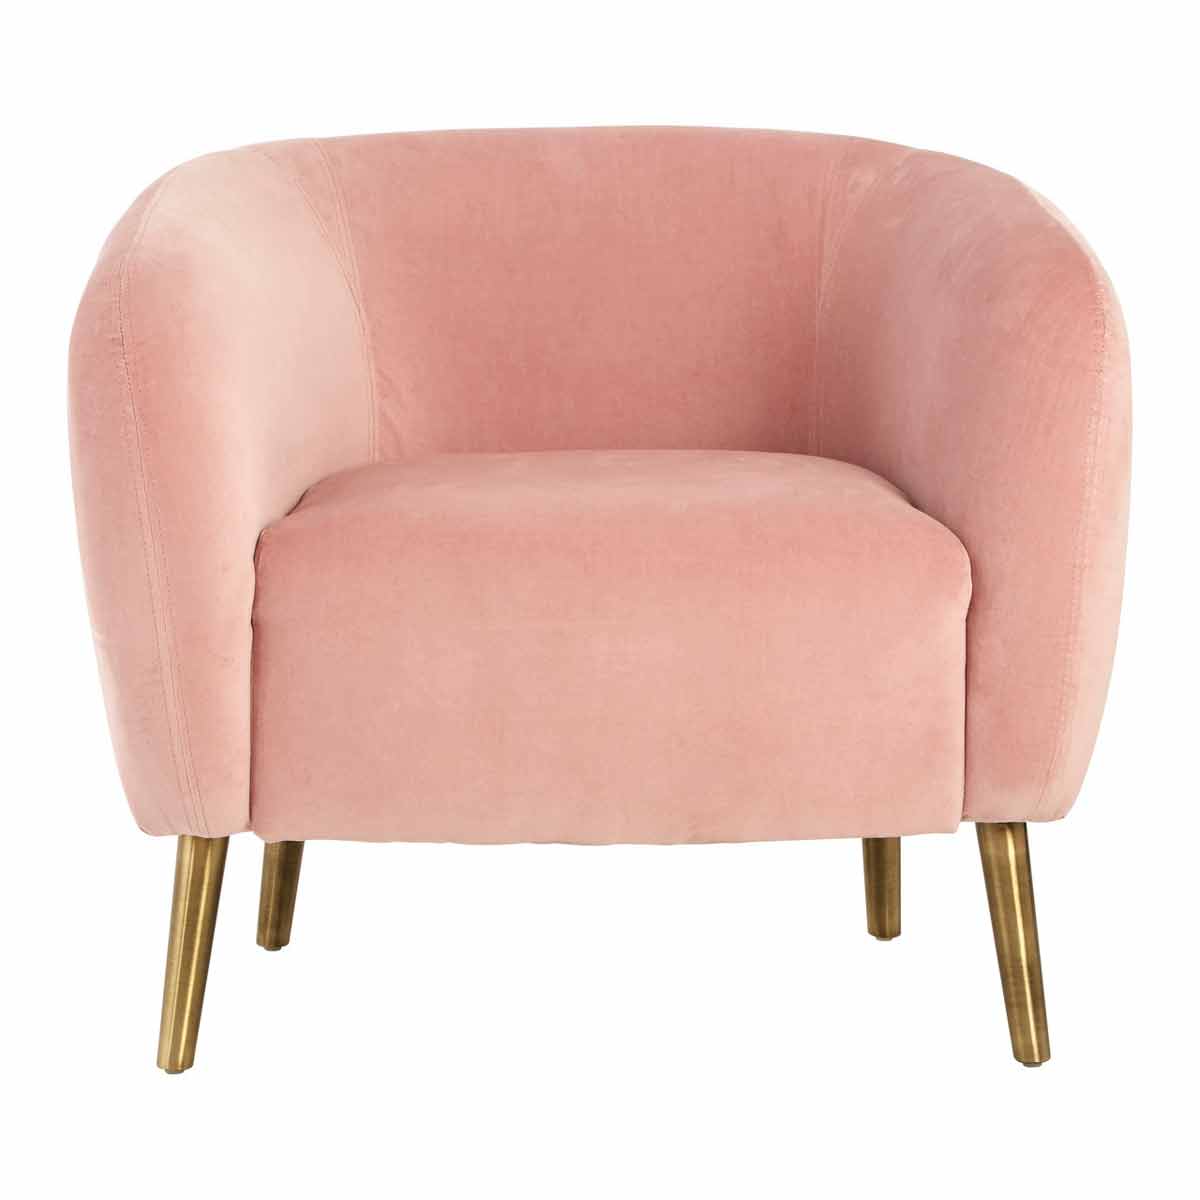 Interiors by PH Round Armchair Pink Velvet Gold Finish Metal Legs